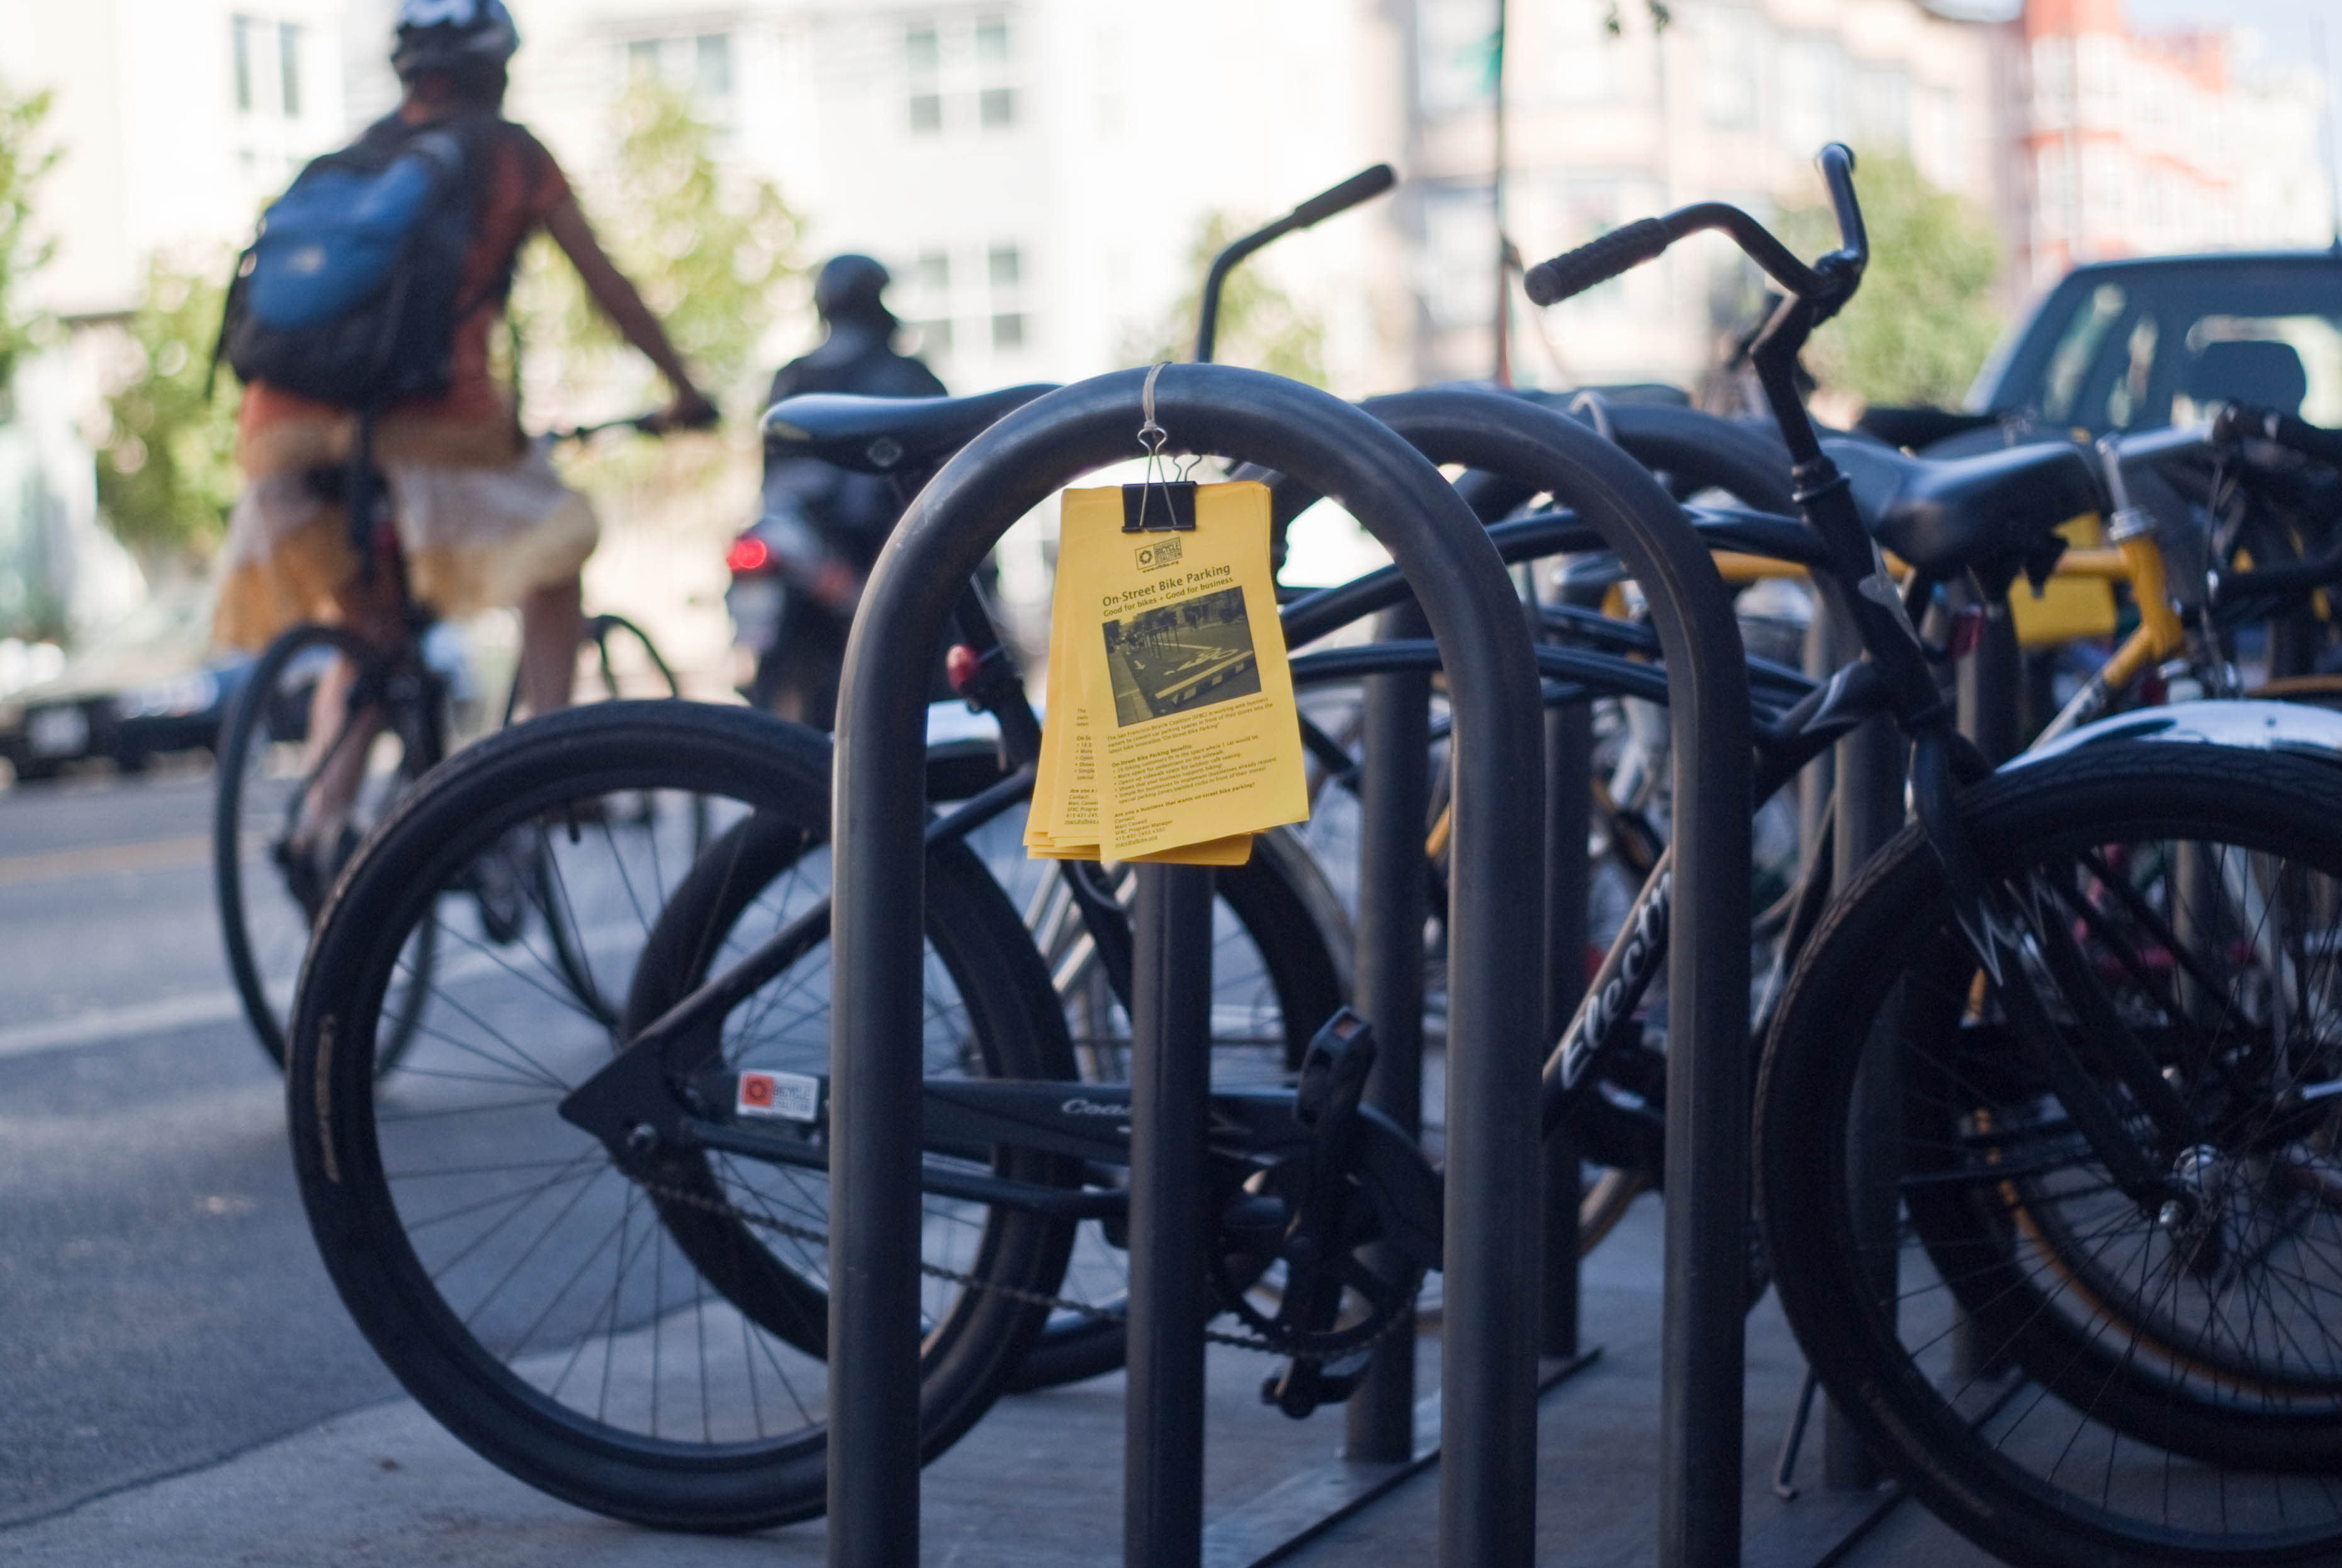 09417 On-Street Bike Parking outside Four Barrel Coffee on Park(ing) Day